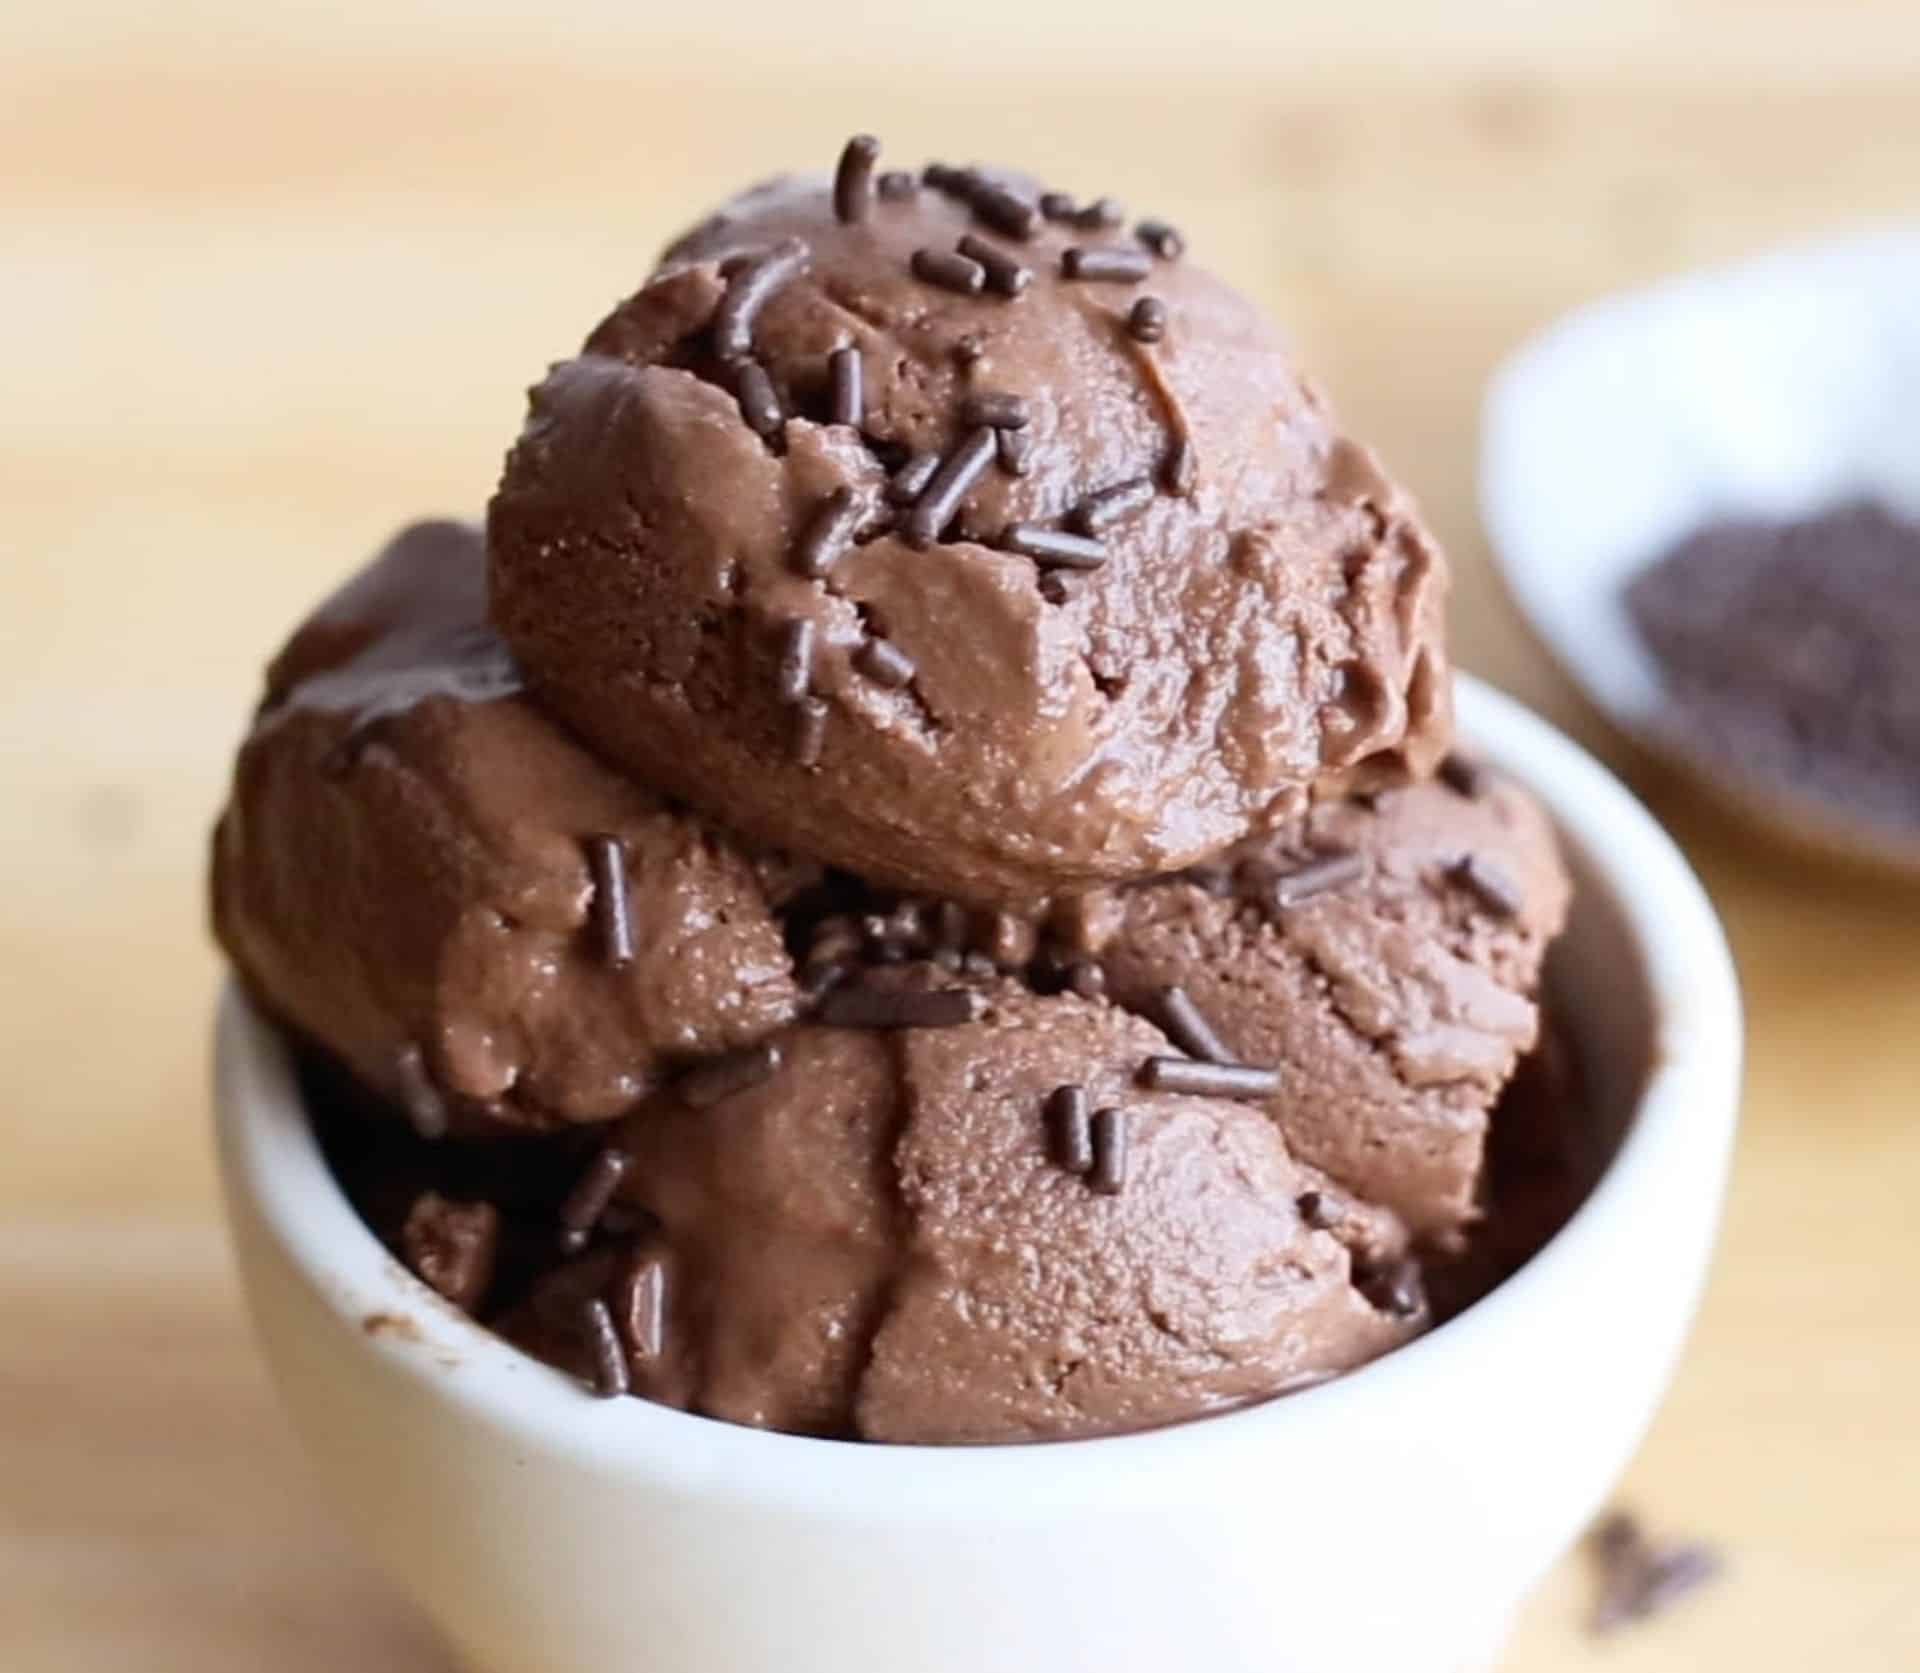 https://deliciousmadeeasy.com/wp-content/uploads/2015/12/Dairy-Free-Chocolate-Ice-Cream.jpg